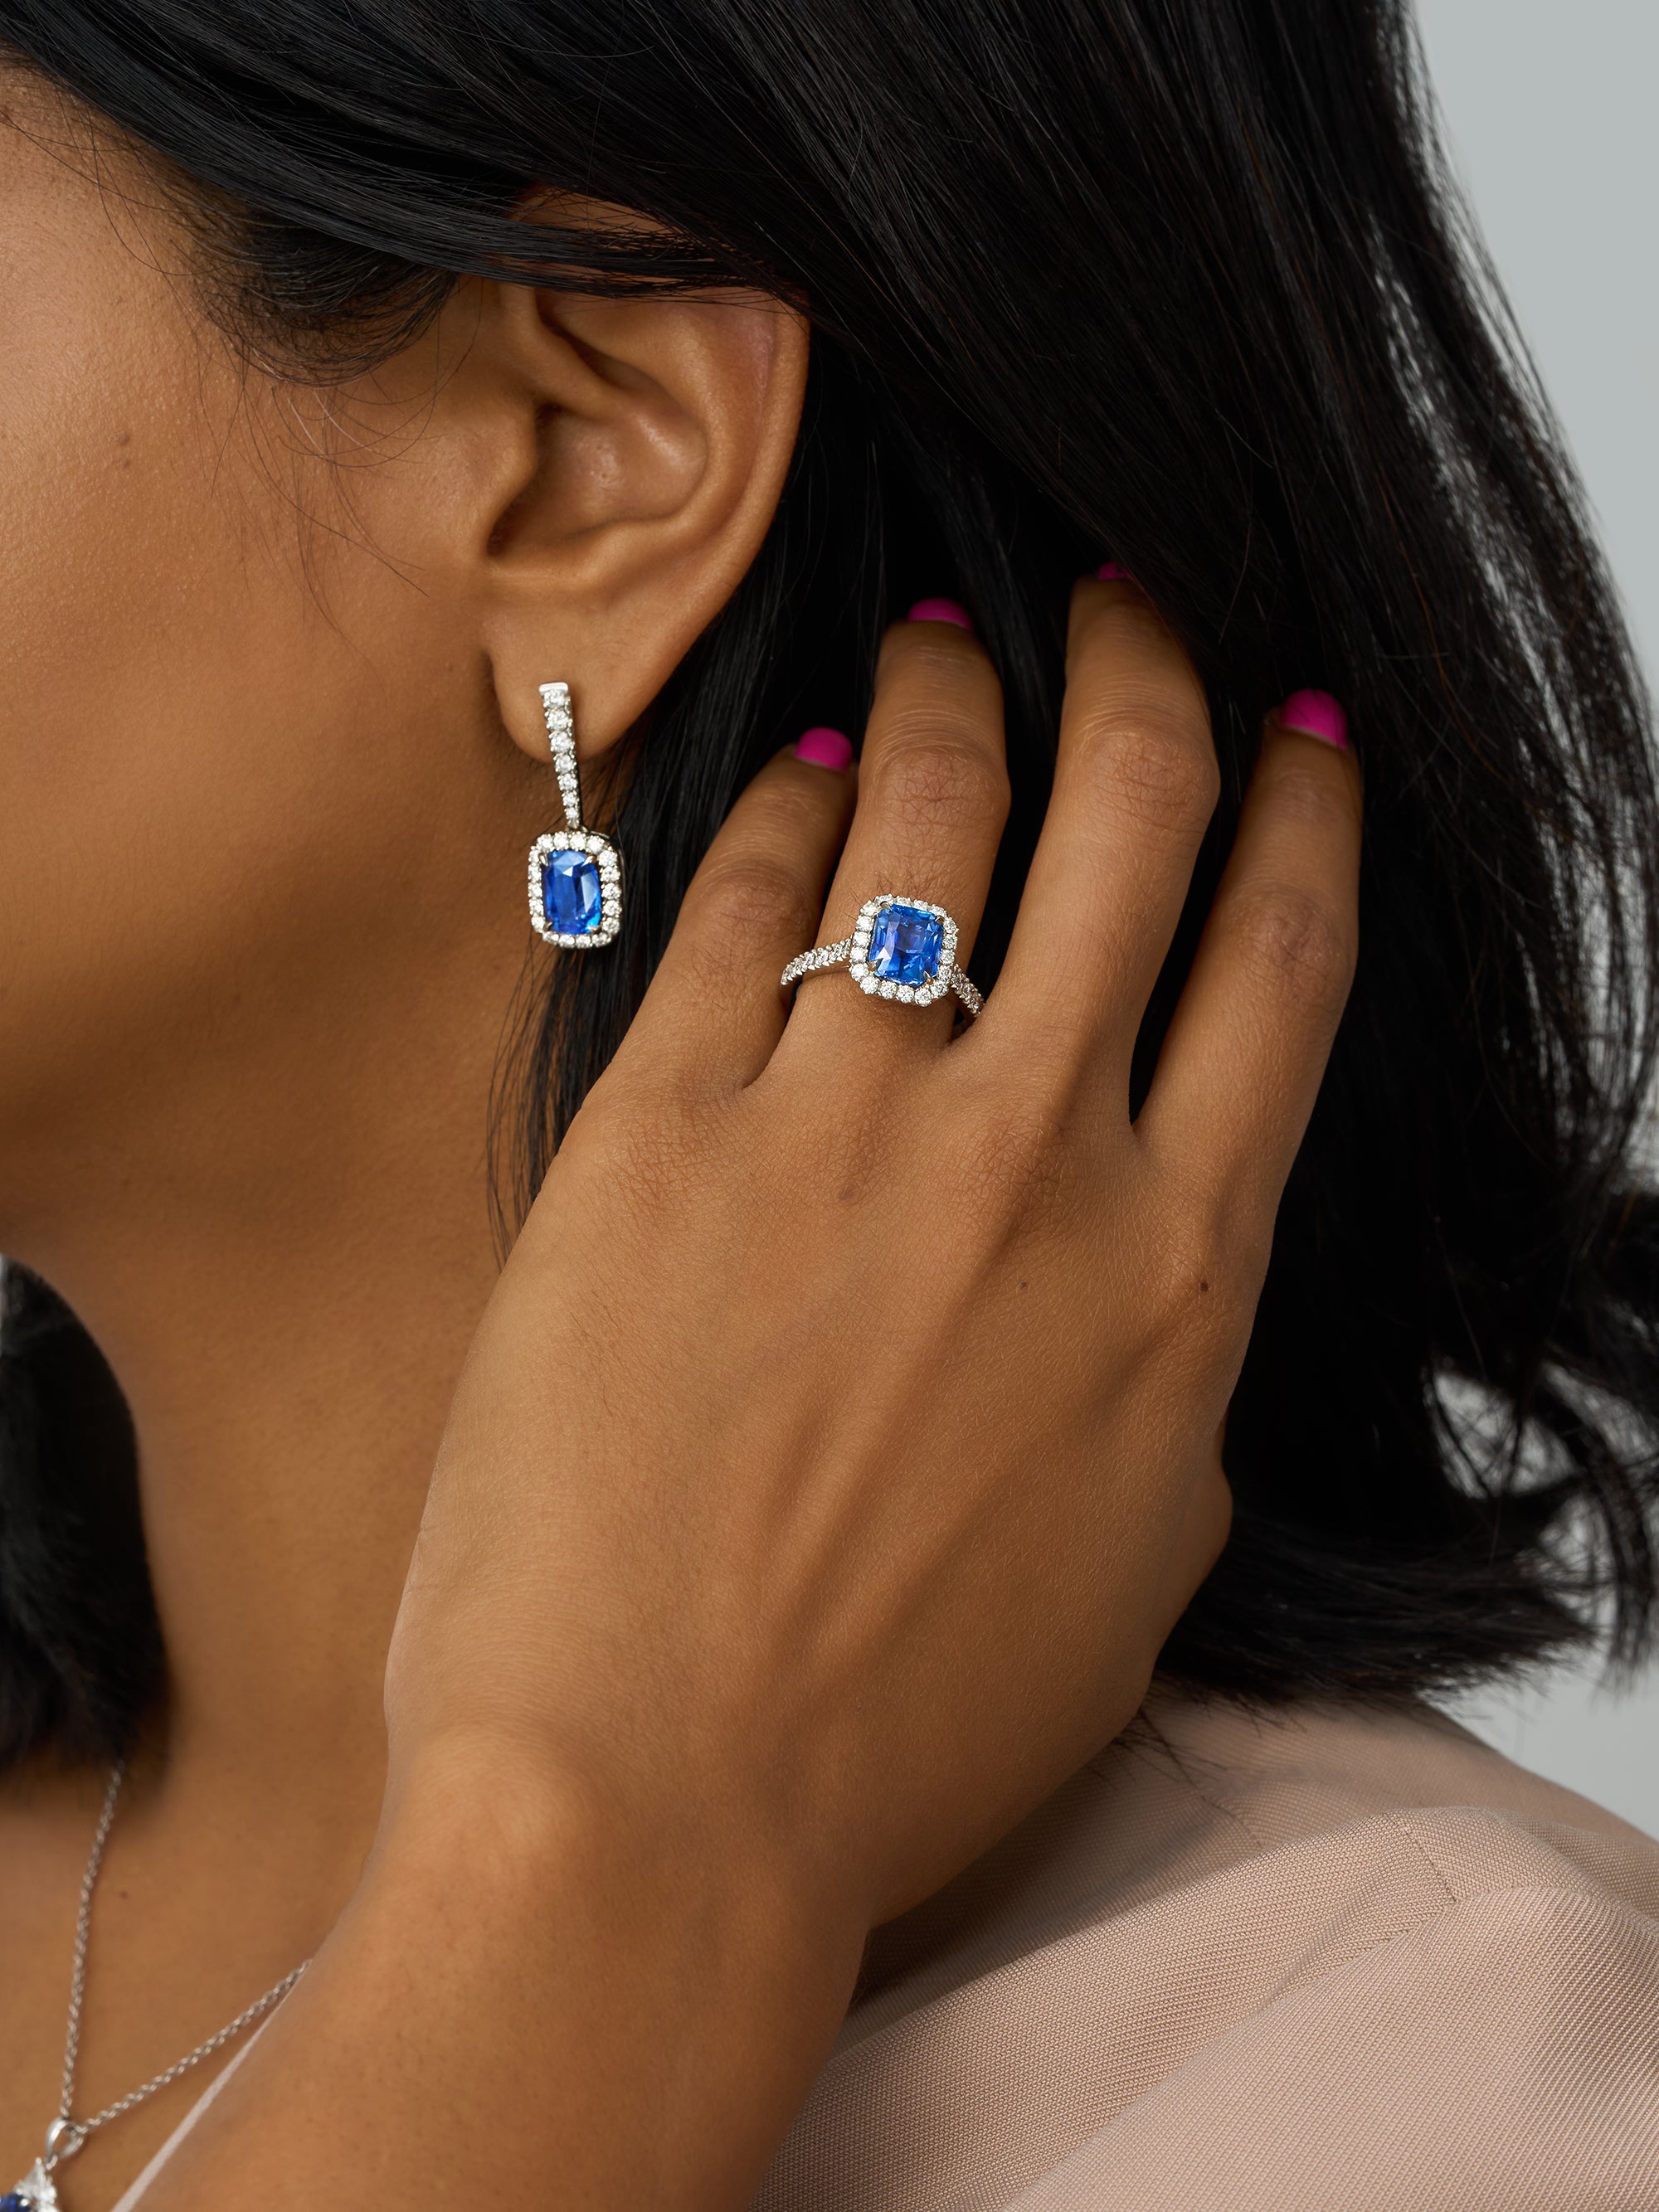 Blue Sapphire & Diamond Earrings: 6ct Ceylon Sapphires